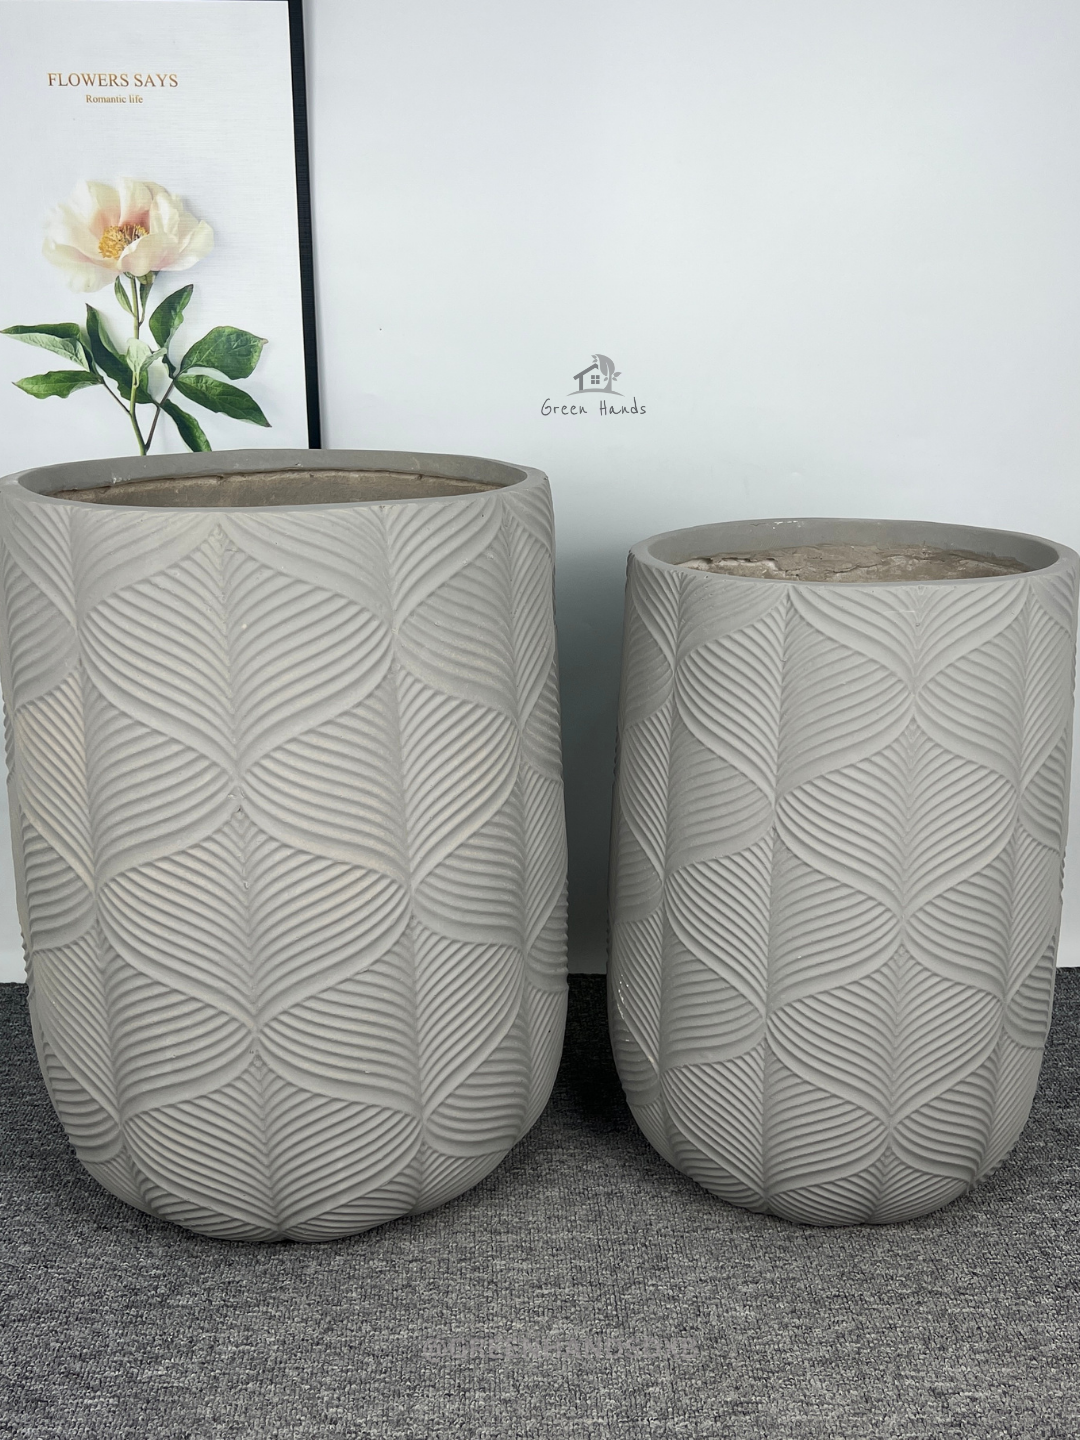 Premium Quality Ficonstone and Fiber Cement Pots